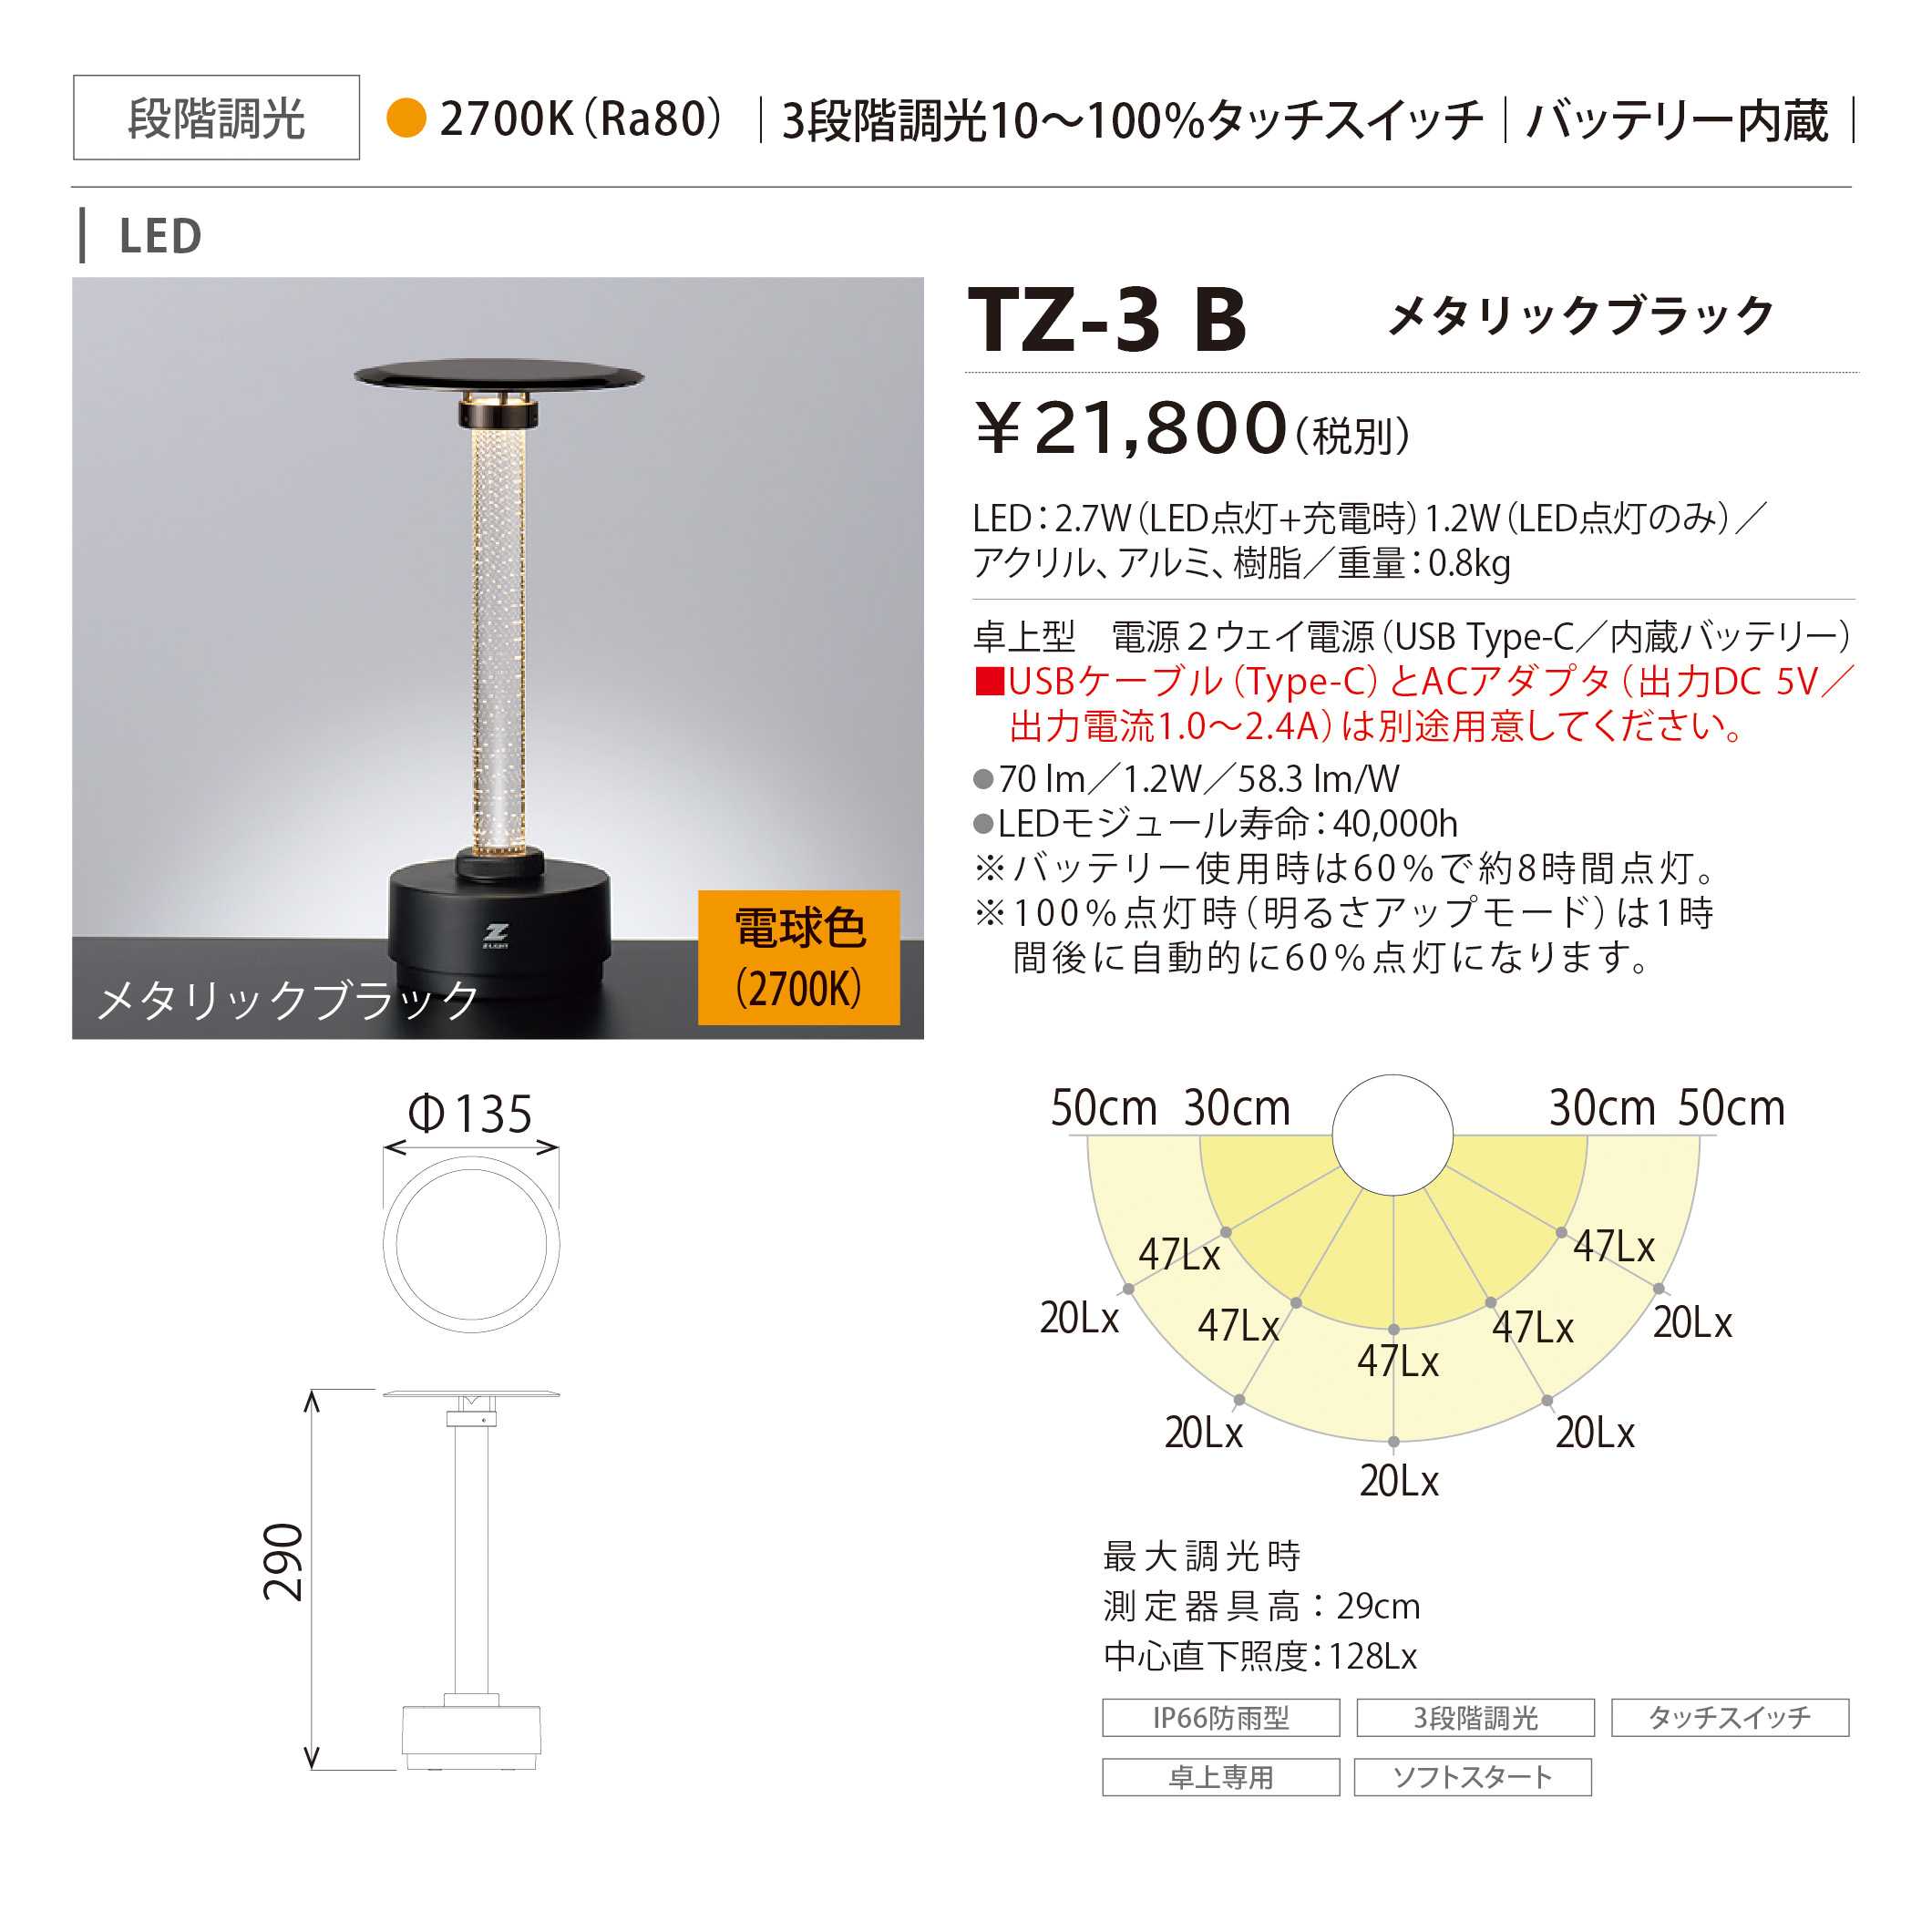 TZ-3B 照明器具 TZ-3 BZ-LIGHT（ゼットライト） Full MoonLEDタスクライト 3段階調光タッチスイッチ付バッテリー内蔵  電球色 メタリックブラック山田照明 照明器具 タカラショップ